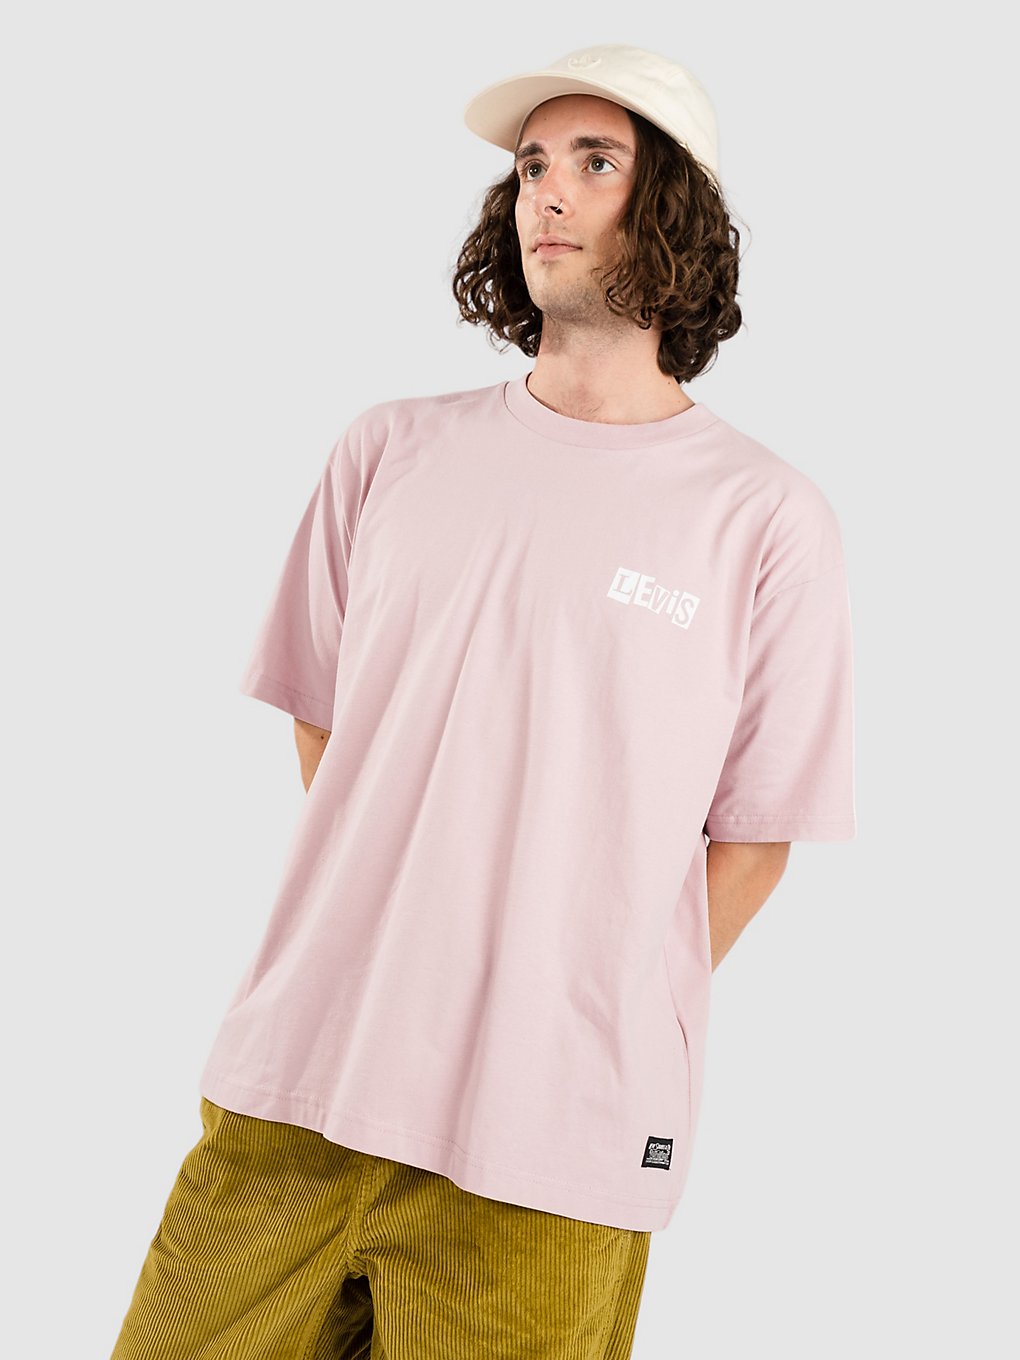 Levi's Skate Graphic Box T-Shirt core pink kaufen